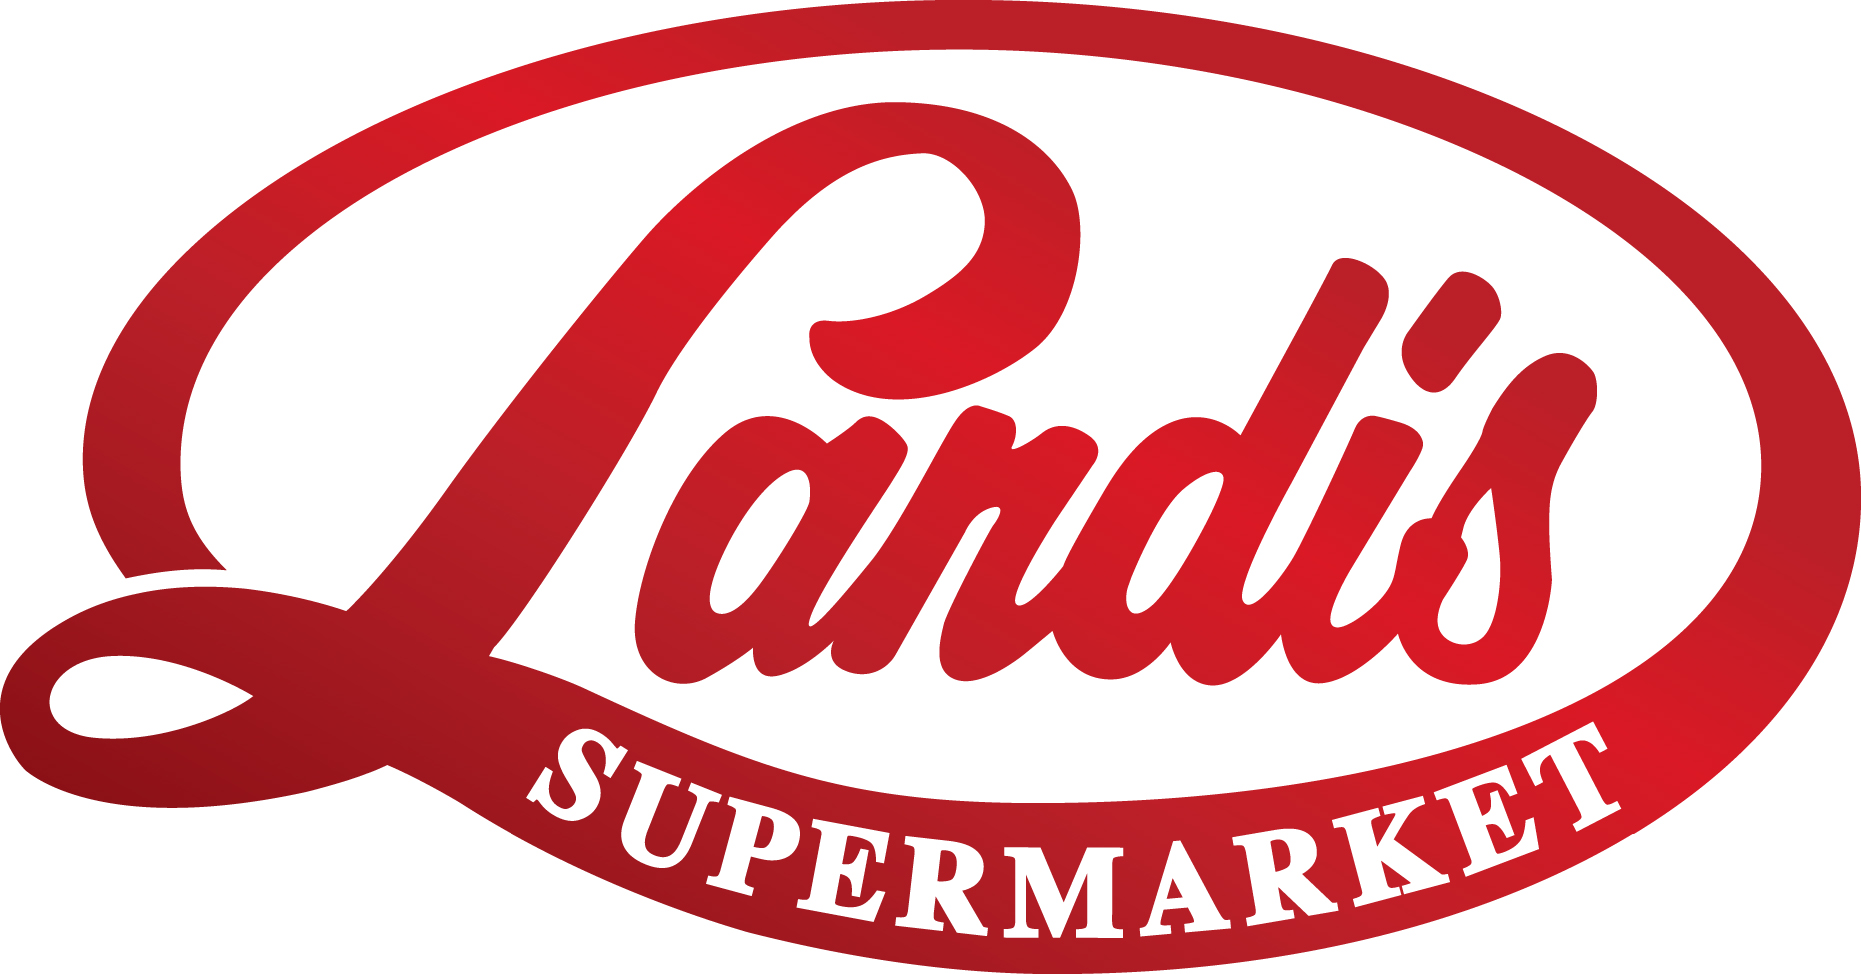 Sponsors / Landis Supermarket Logo - Red.jpg